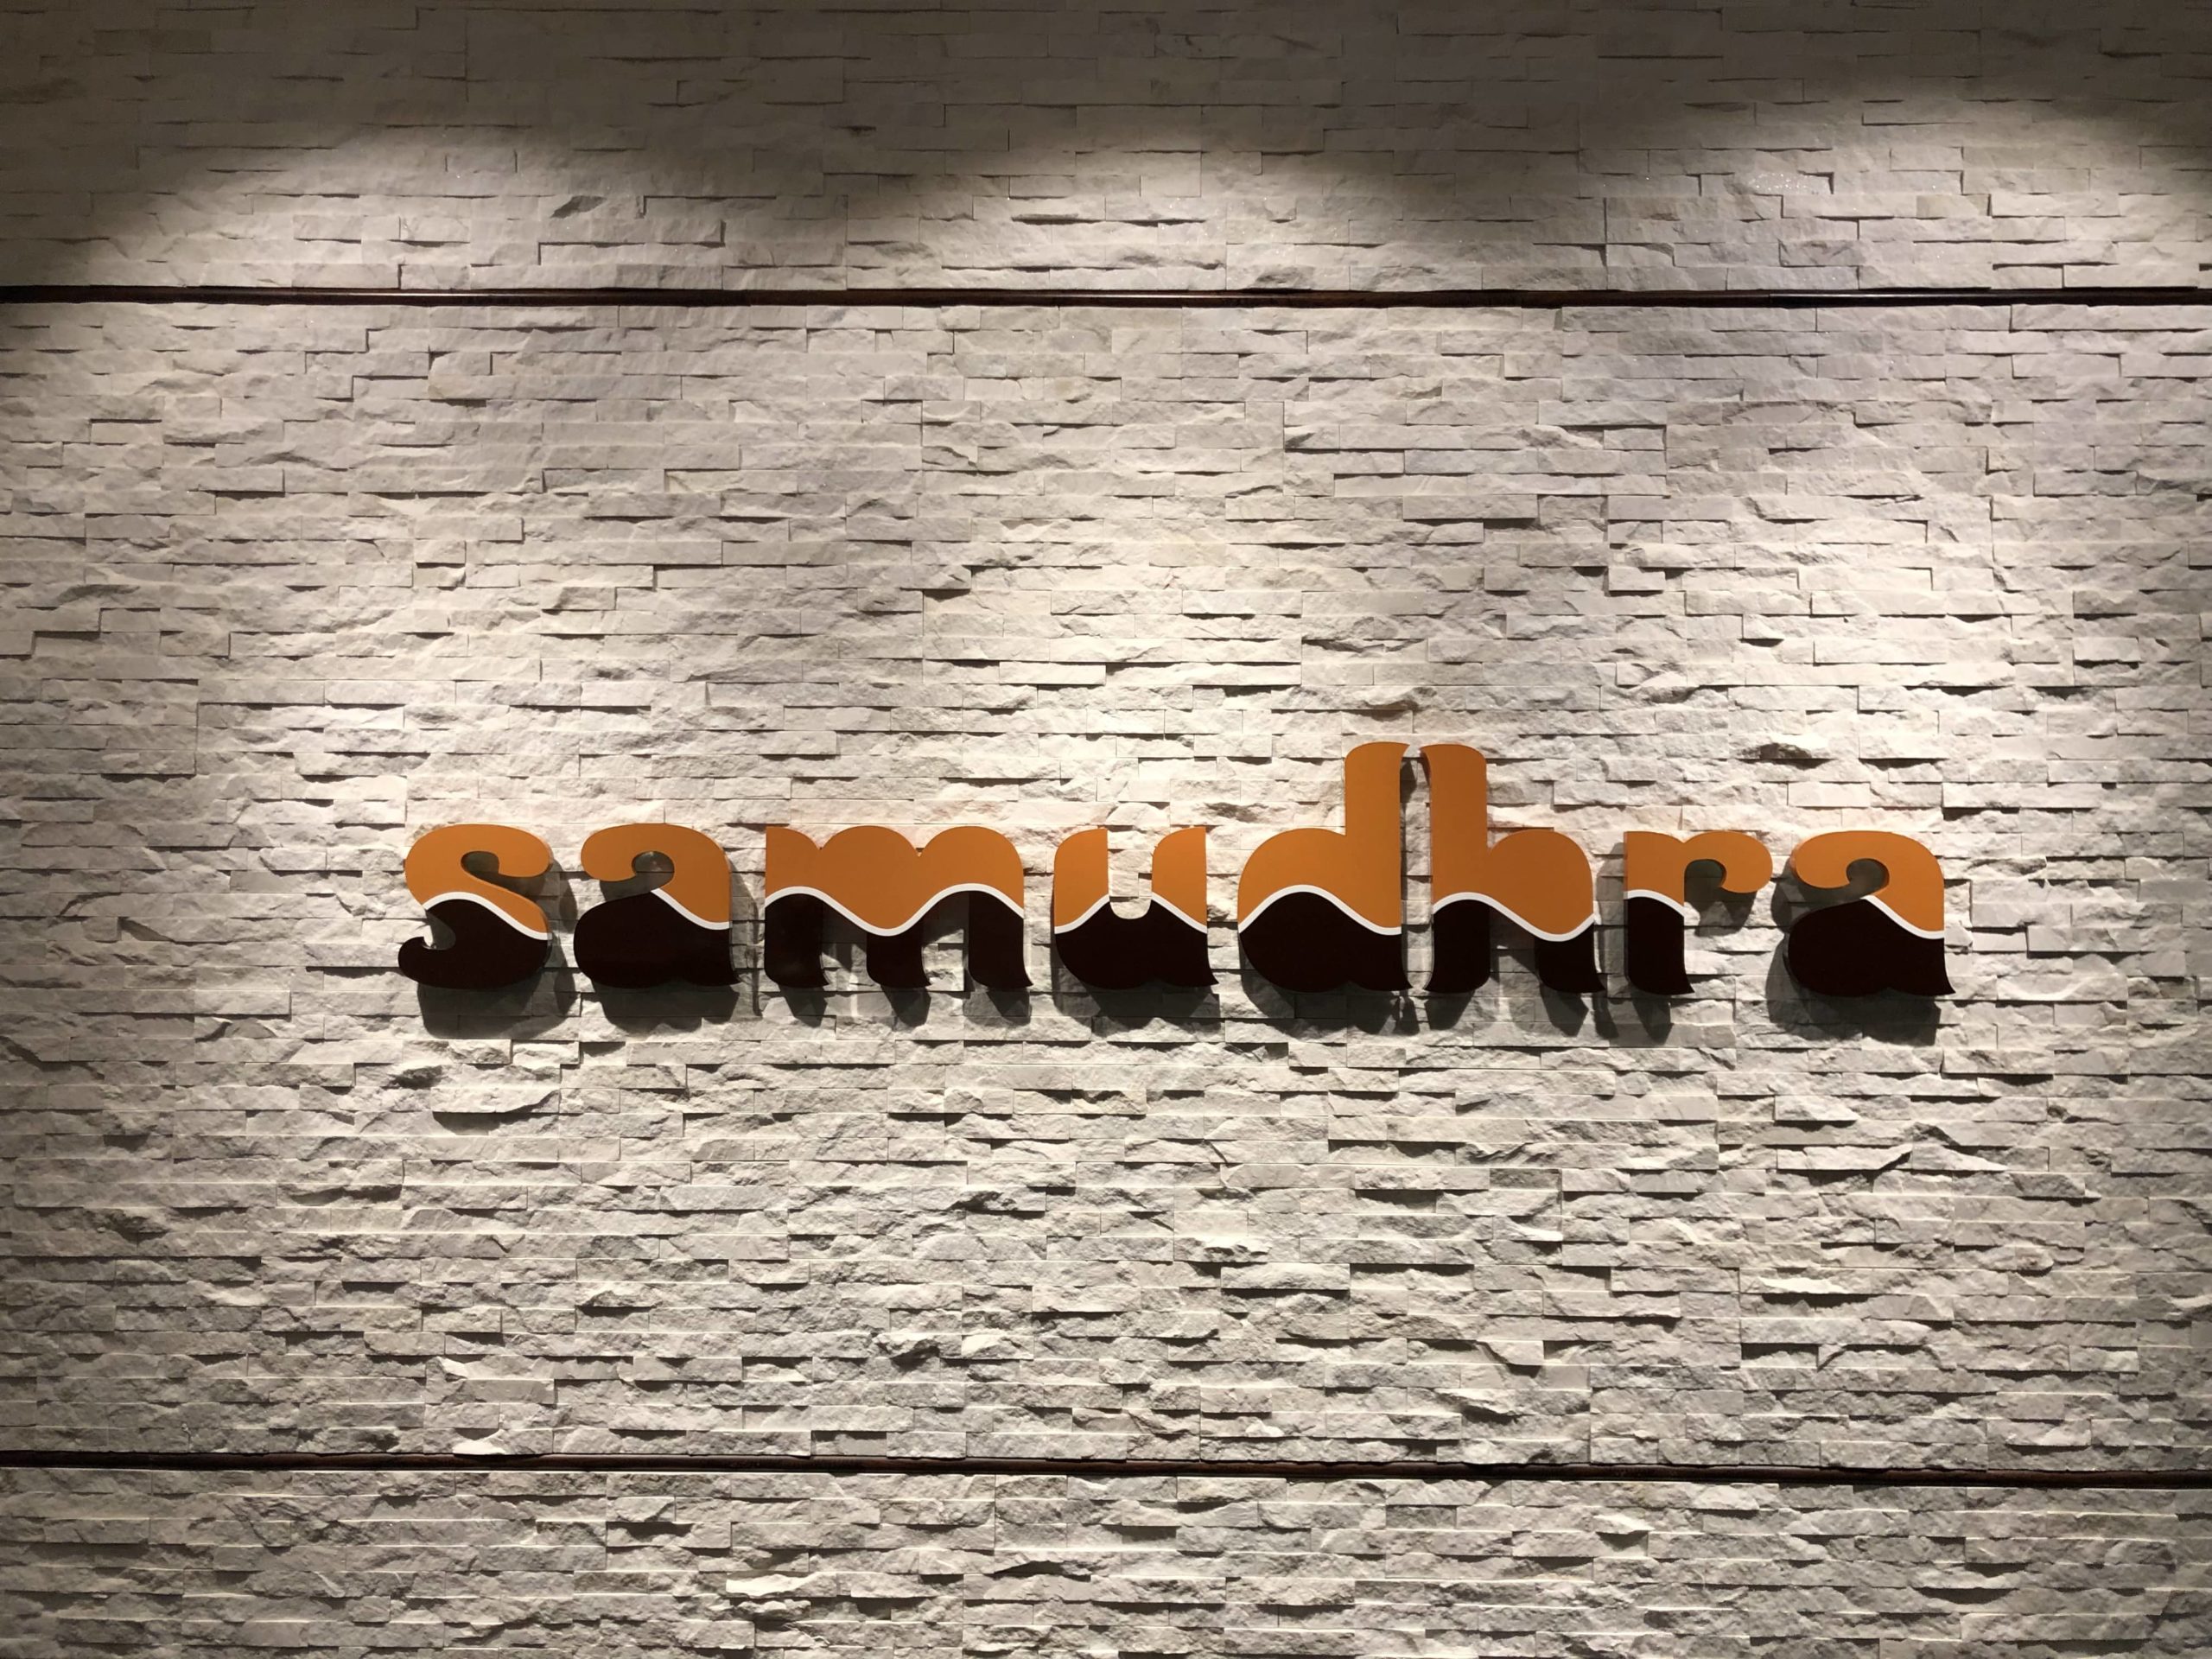 Samudhra Premium Restaurant & Lounge, Franklin Park, New Jersey